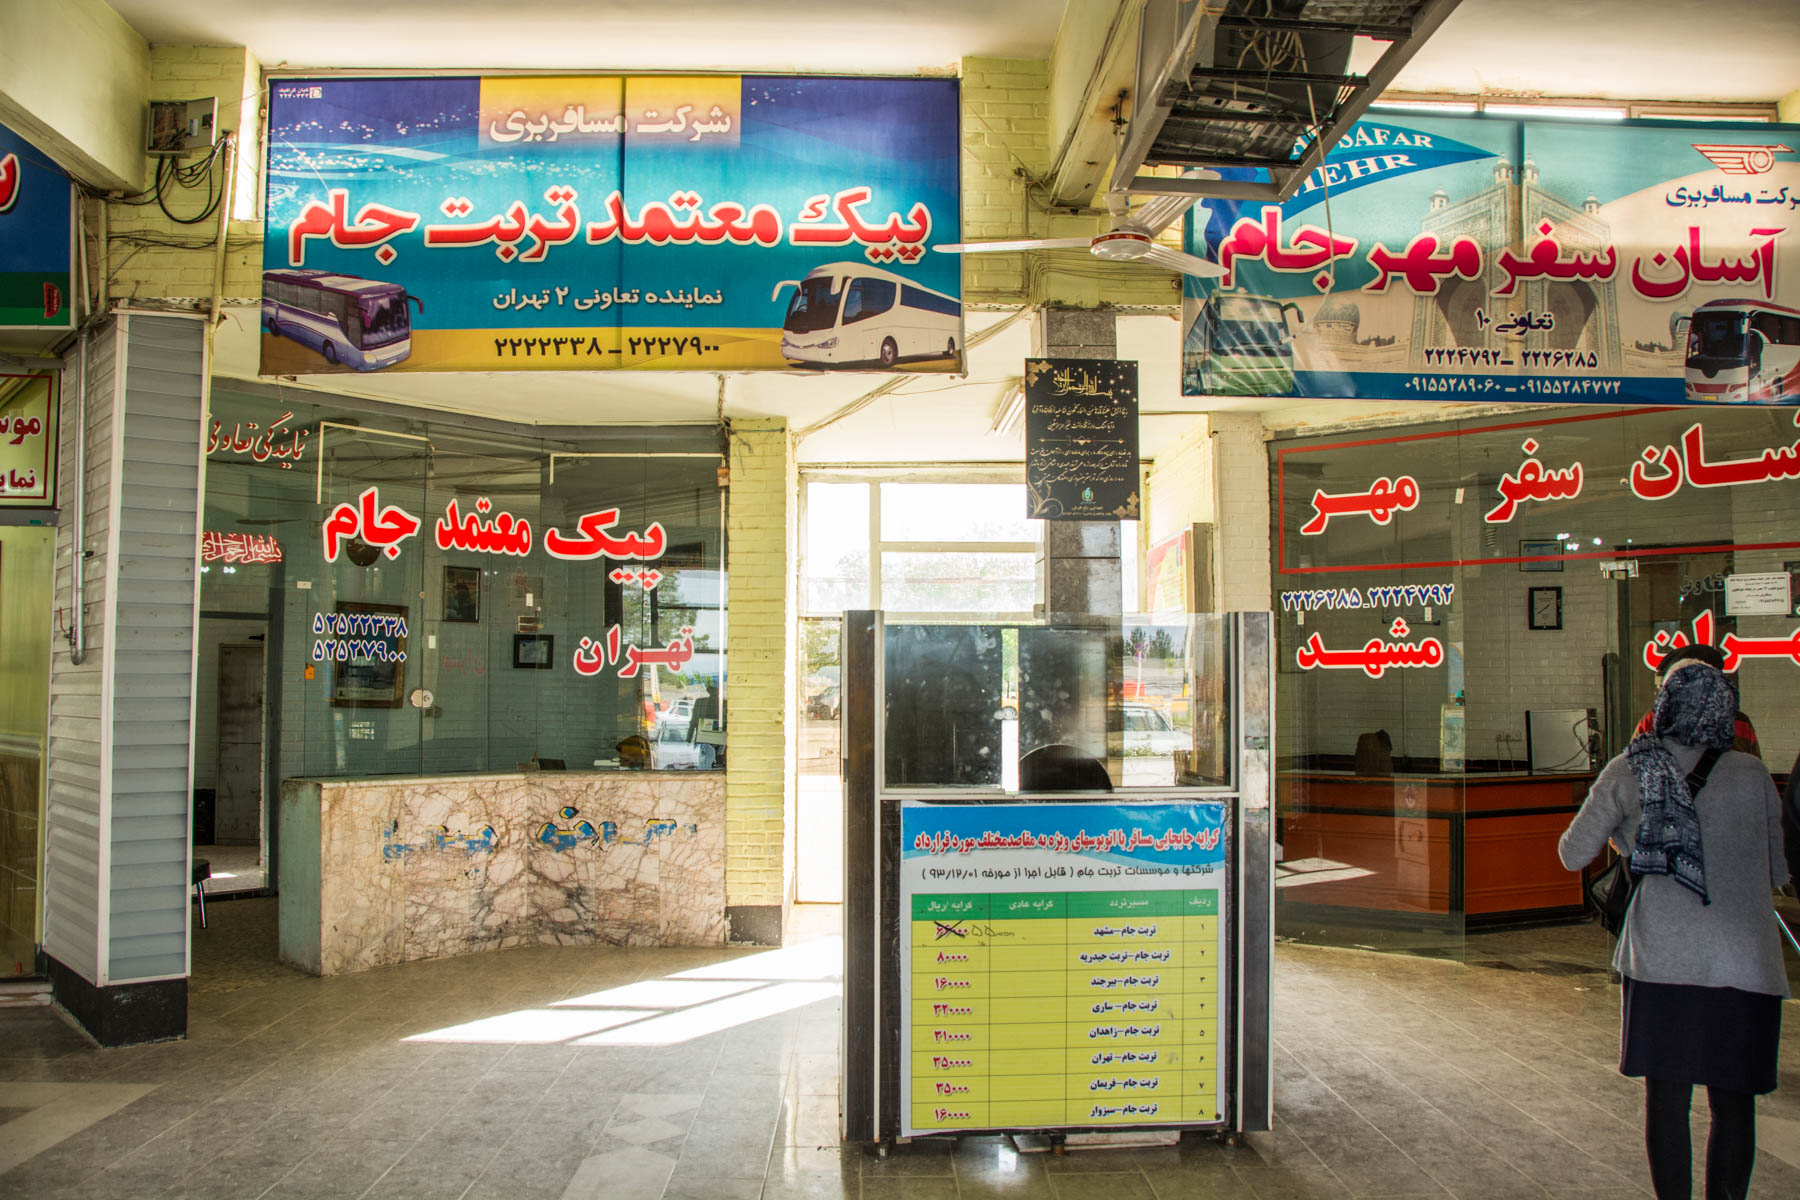 The inside of the bus station in Torbat-e Jam